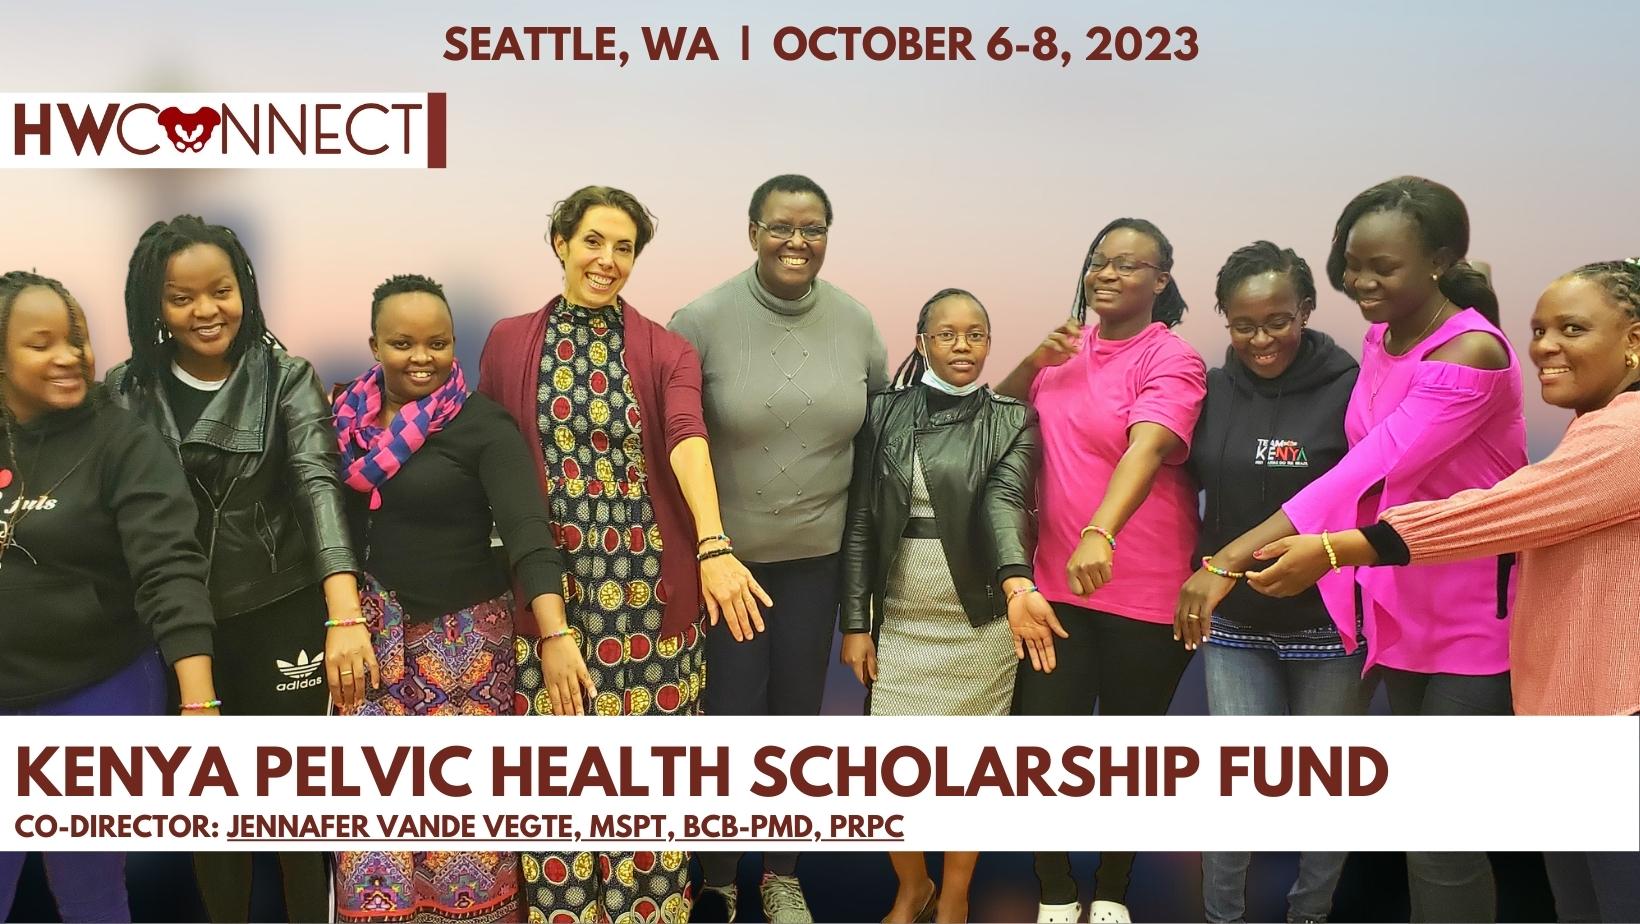 Kenya Pelvic Health Scholarship Fund will be at HWConnect